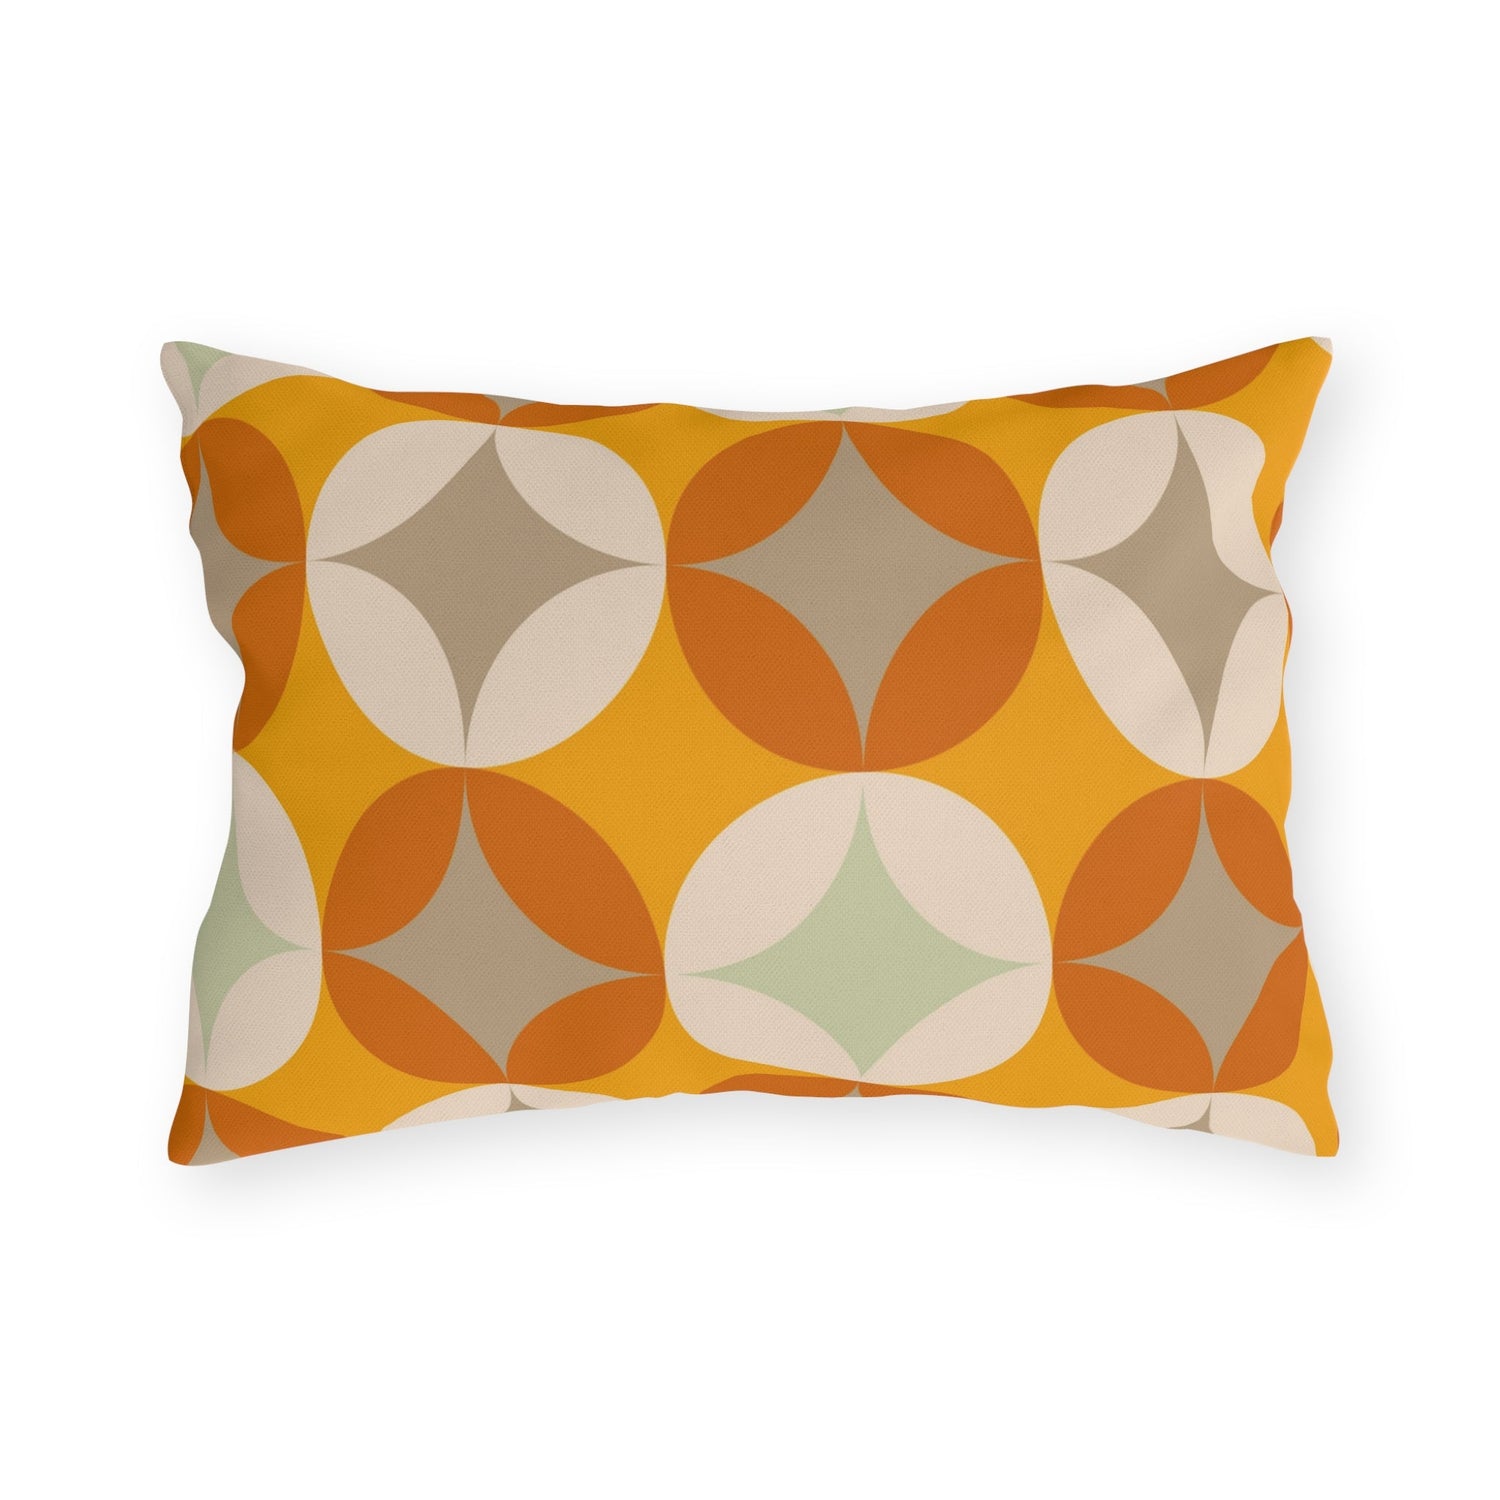 Mid Century Modern Outdoor Pillows, Mustard Yellow, Cream, Light Gray Starburst Pillow Home Decor